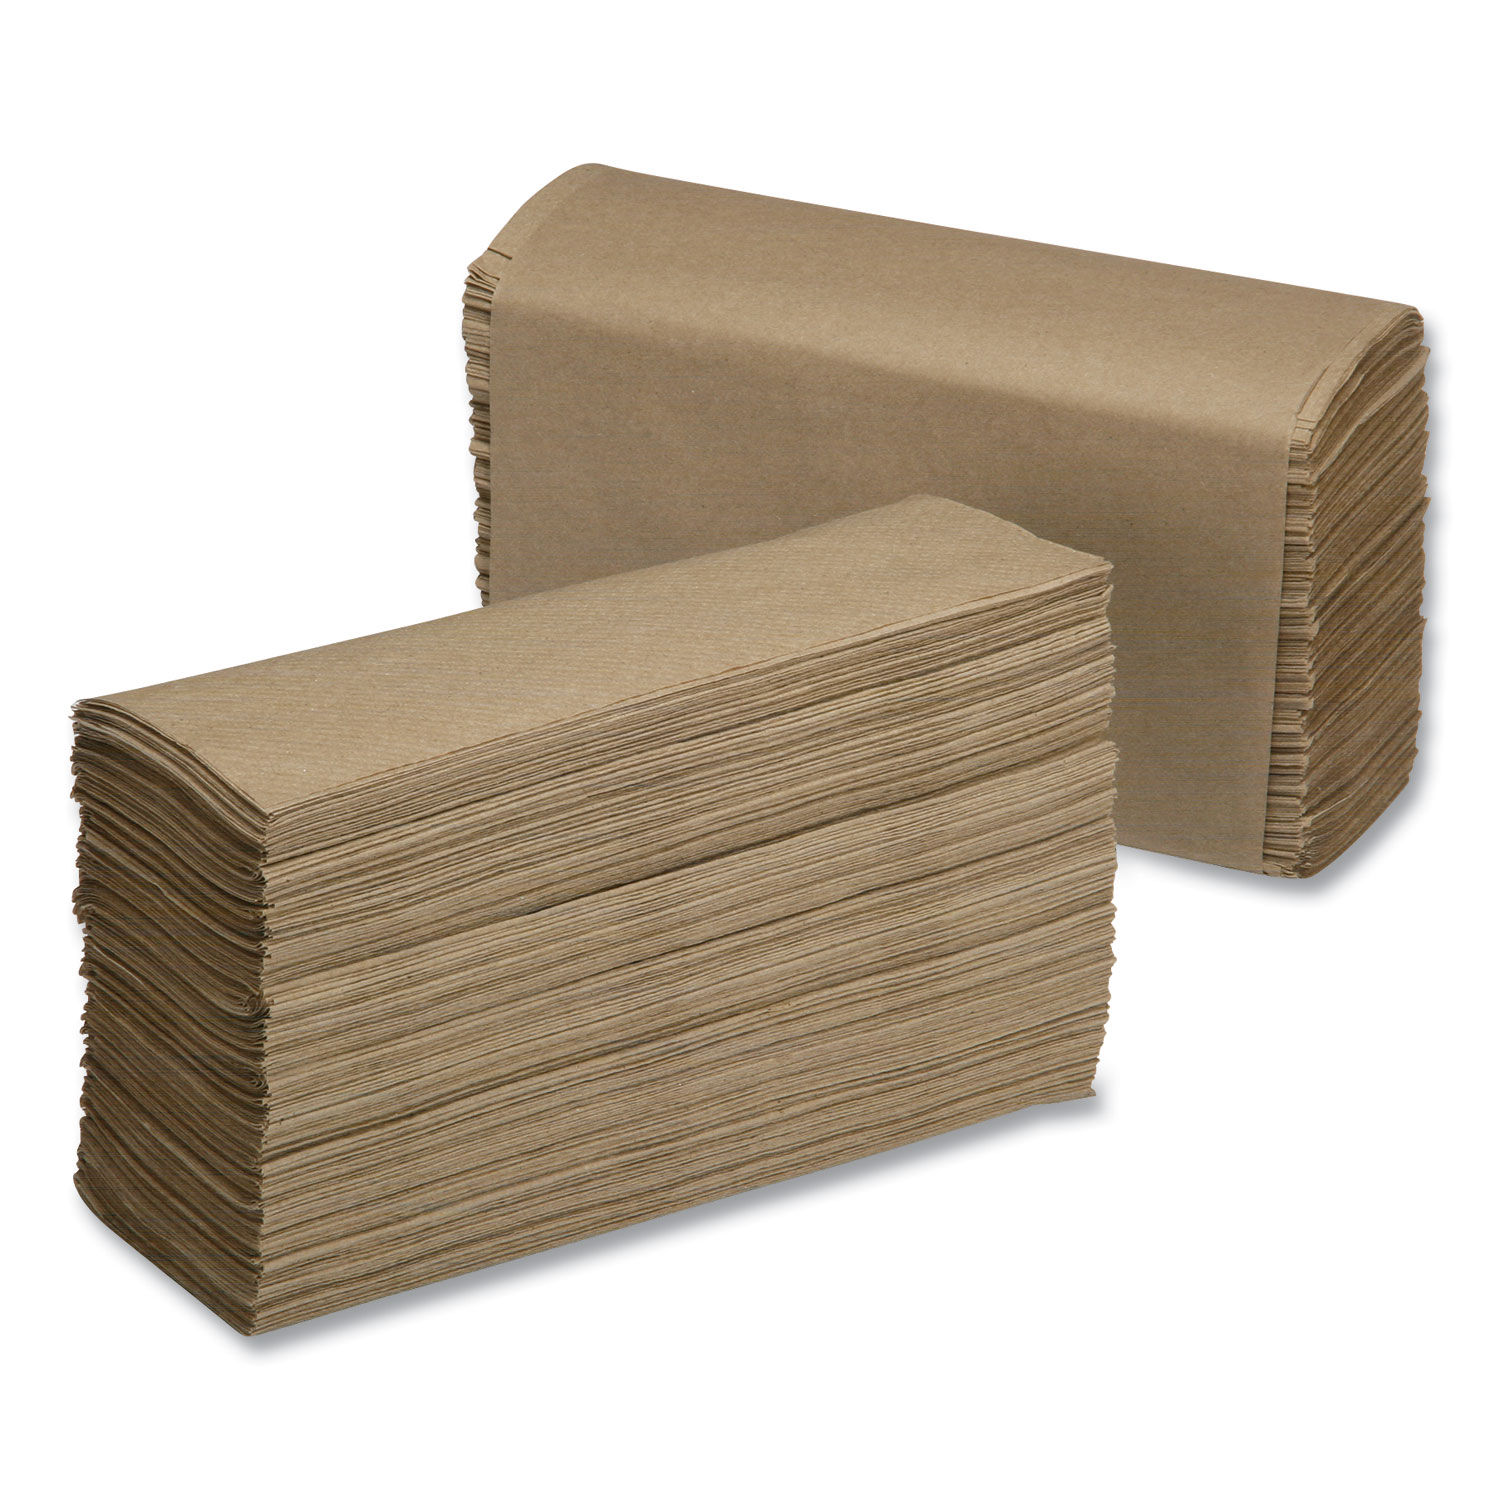 SKILCRAFT Multi-Fold Paper Towel, 1-Ply, 9.25 x 3, Natural, 250/Pack, 16 Packs/Box, GSA 8540002910389